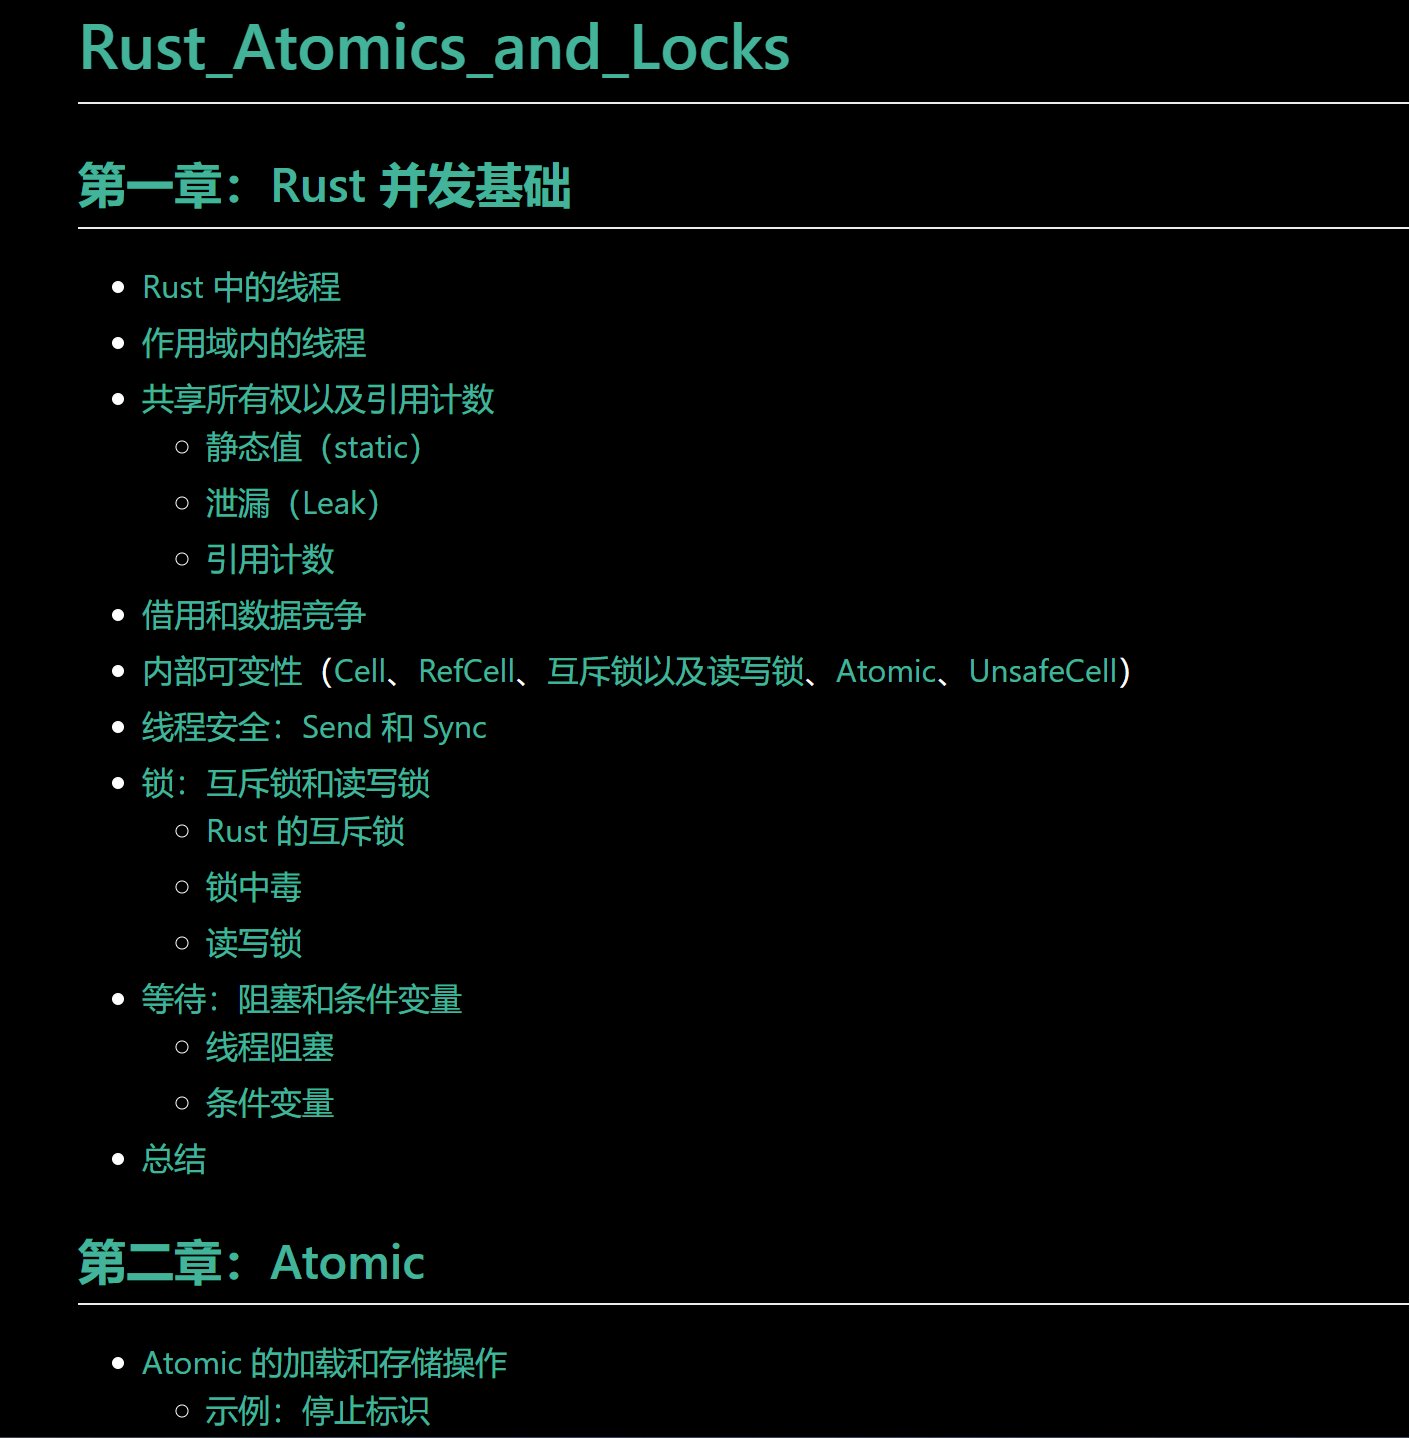 Rust Atomics and Locks 中文翻译版